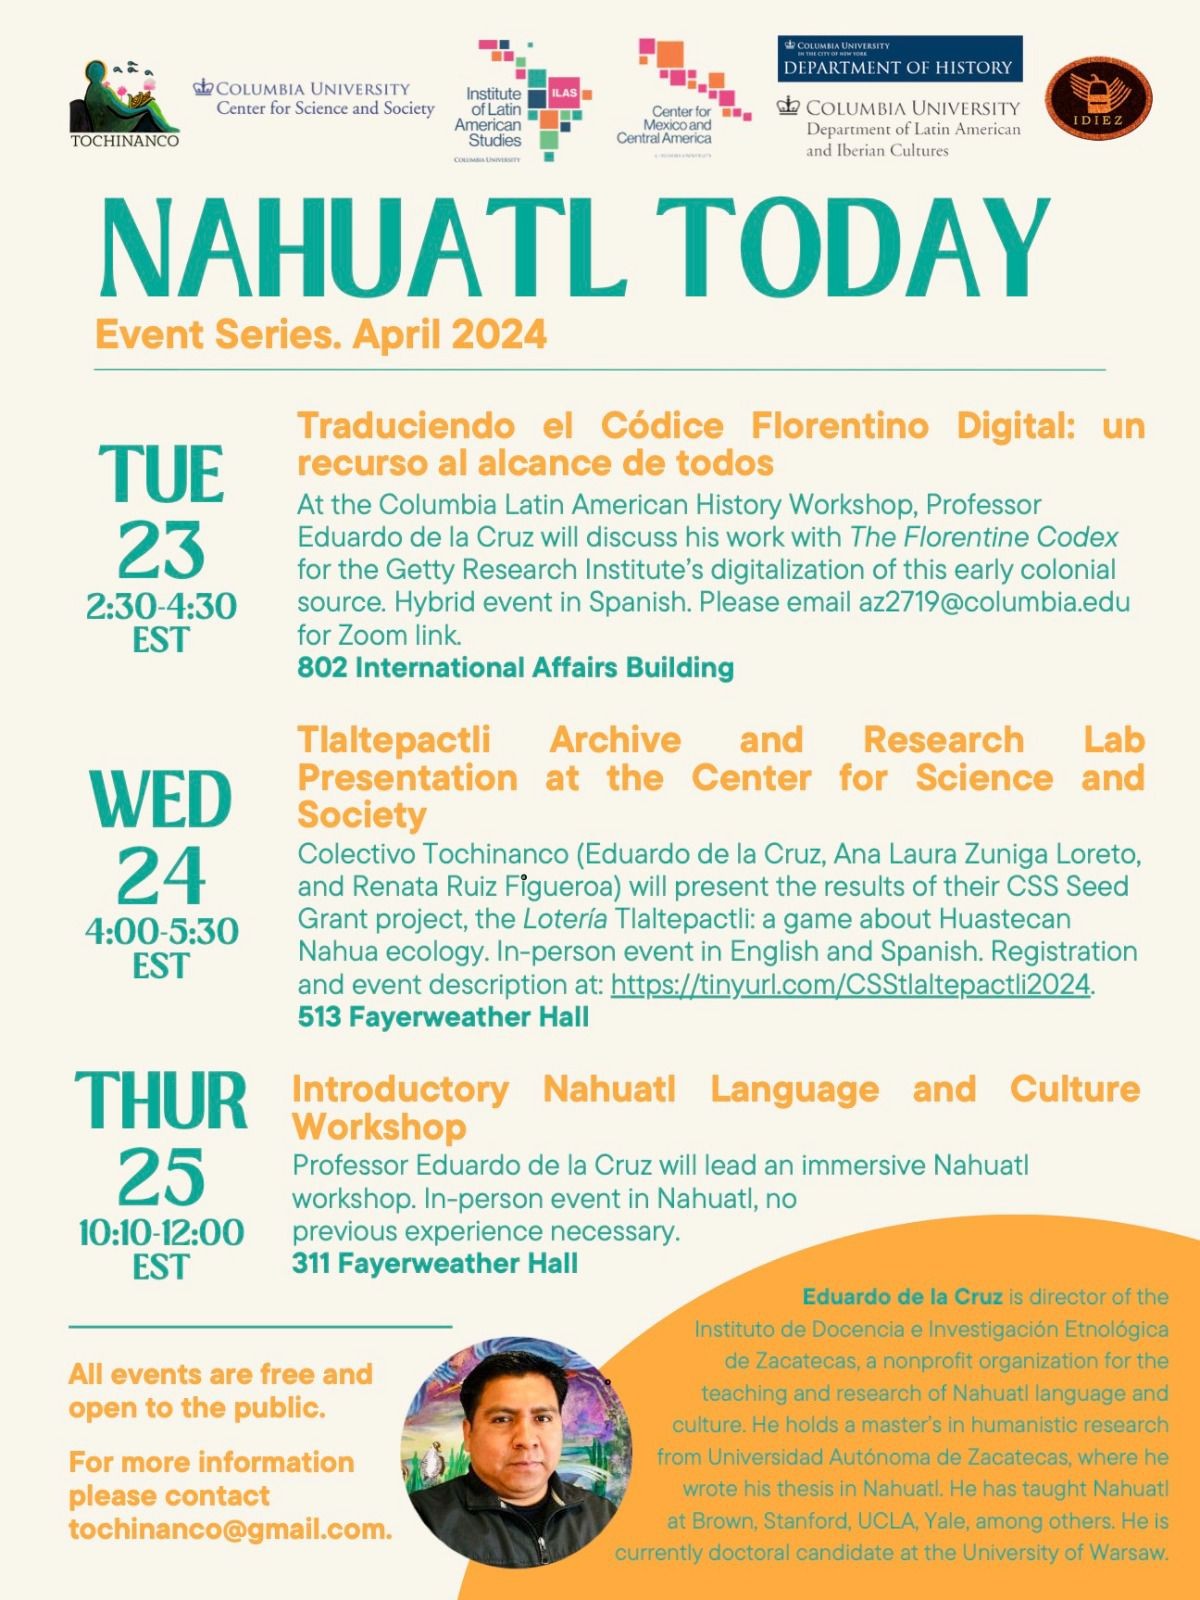 flyer event series nahuatl today